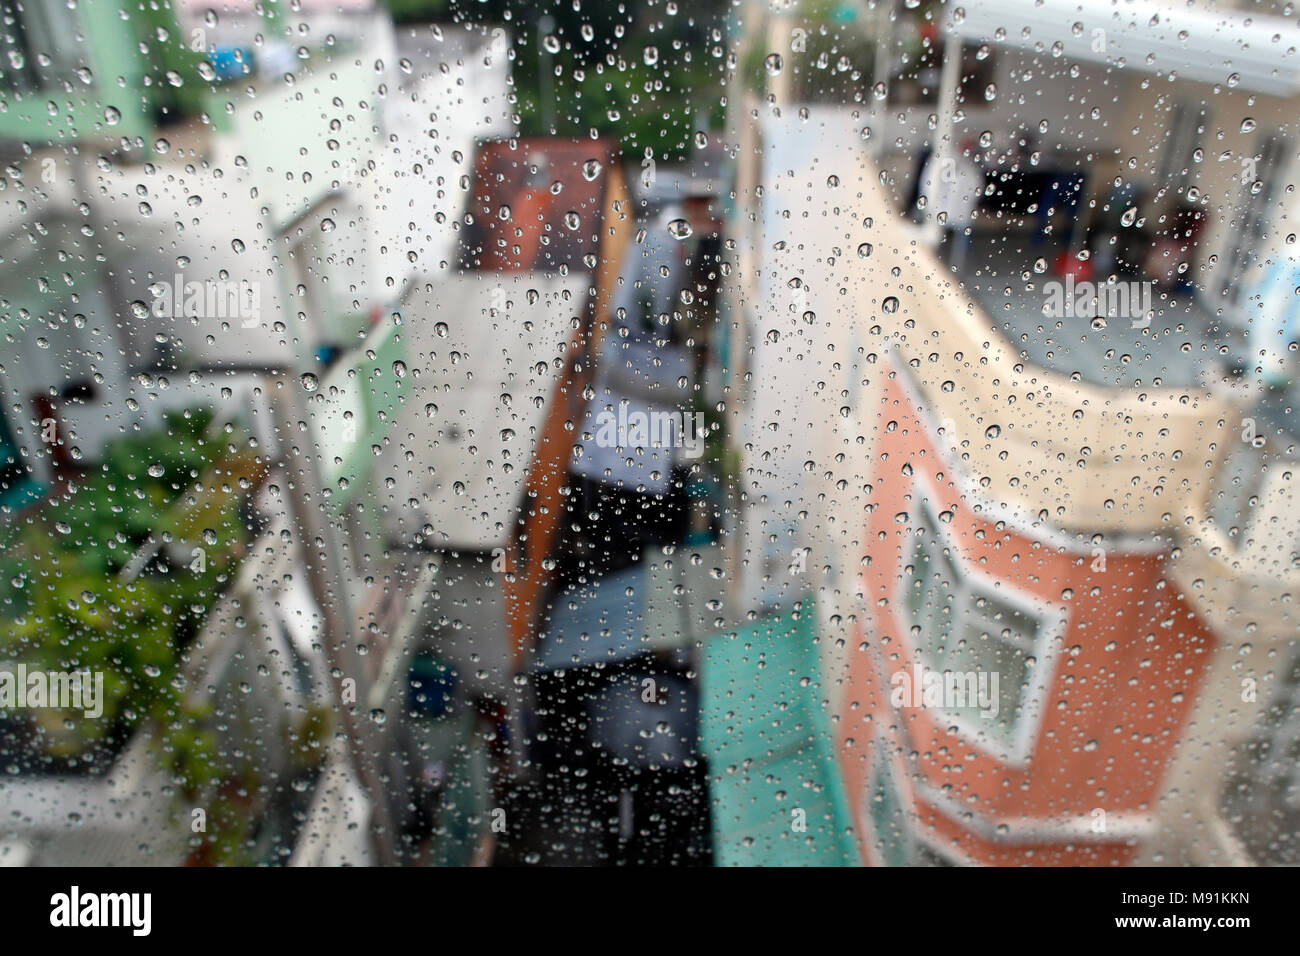 Monsoon season.  close-up of raindrops on glass window.  Drops of rain water on window, street scene in background.  Ho Chi Minh City. Vietnam. Stock Photo